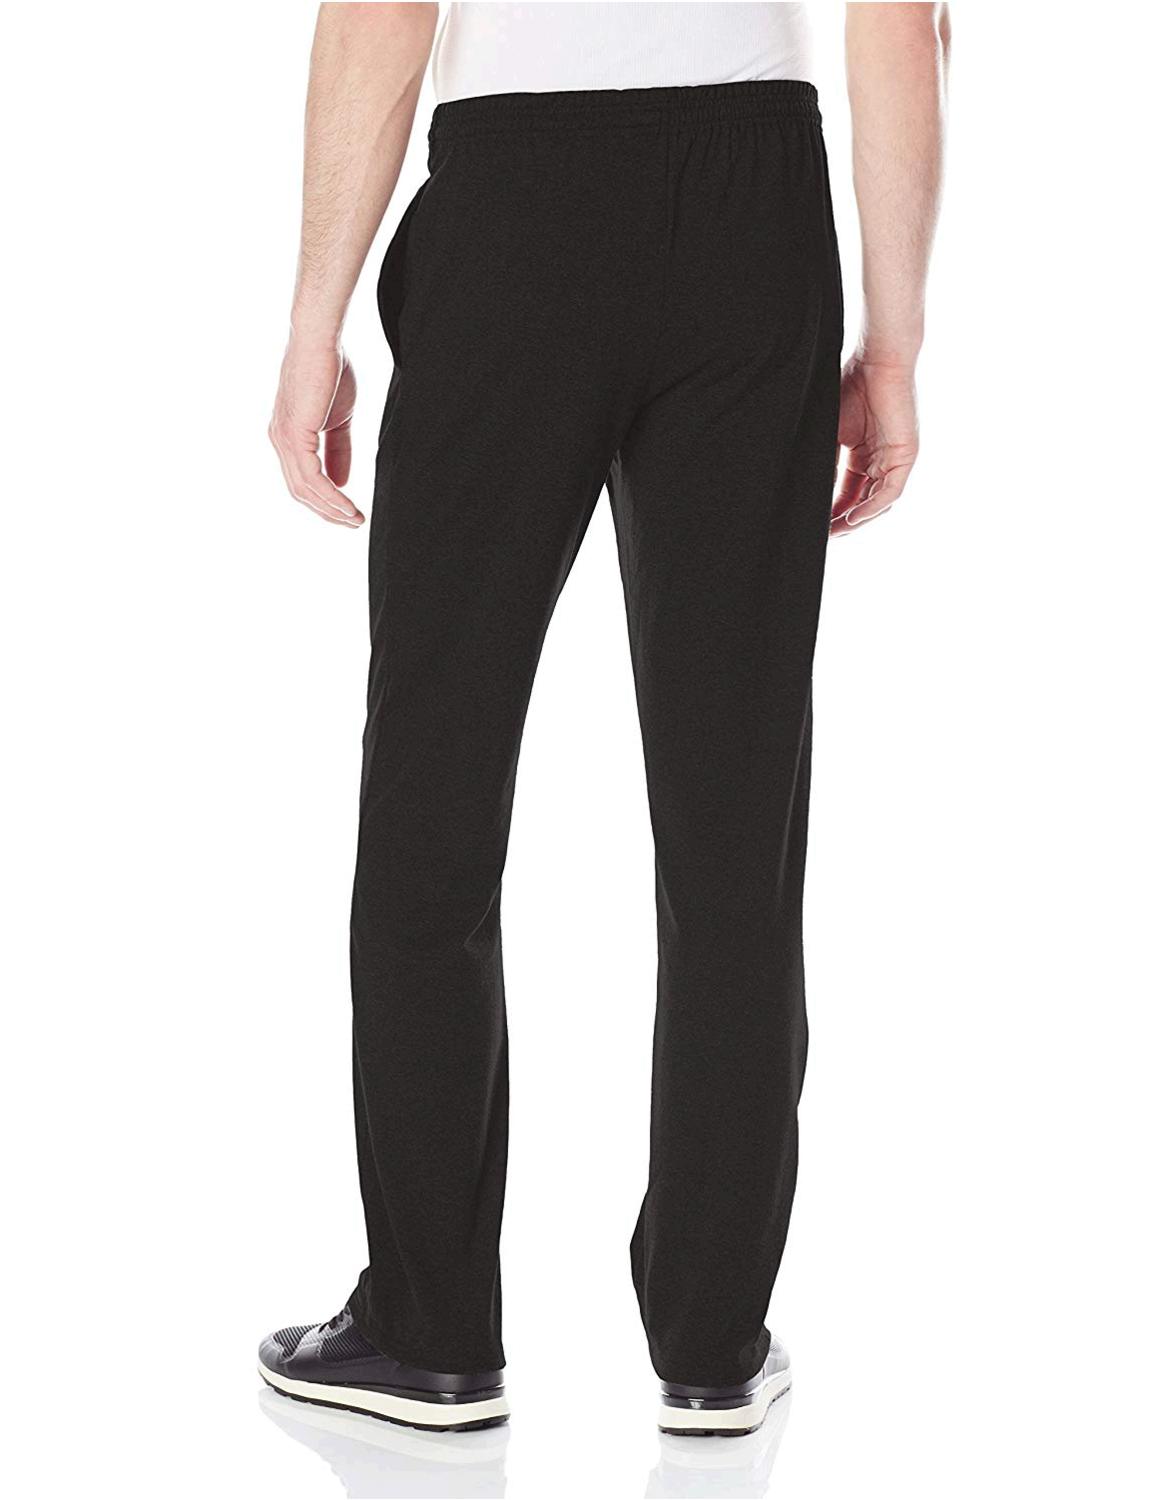 Hanes Men's Jersey Pant, Black, Medium, Black, Size Medium p7Q6 | eBay